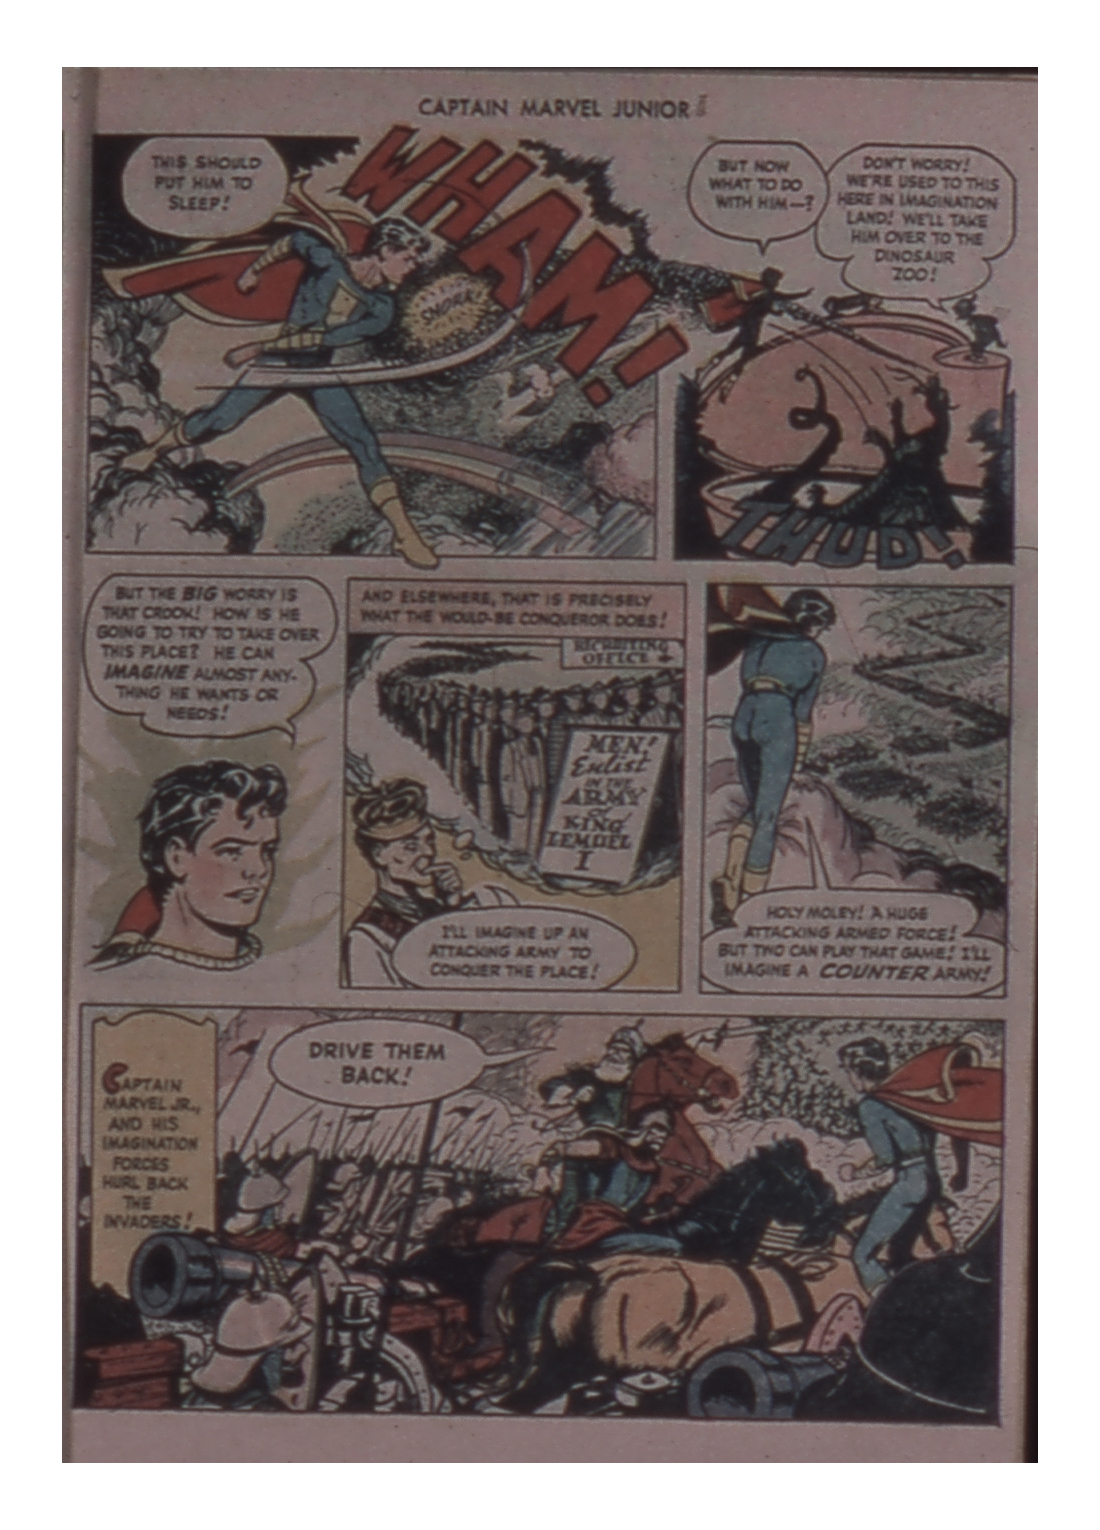 Read online Captain Marvel, Jr. comic -  Issue #81 - 11